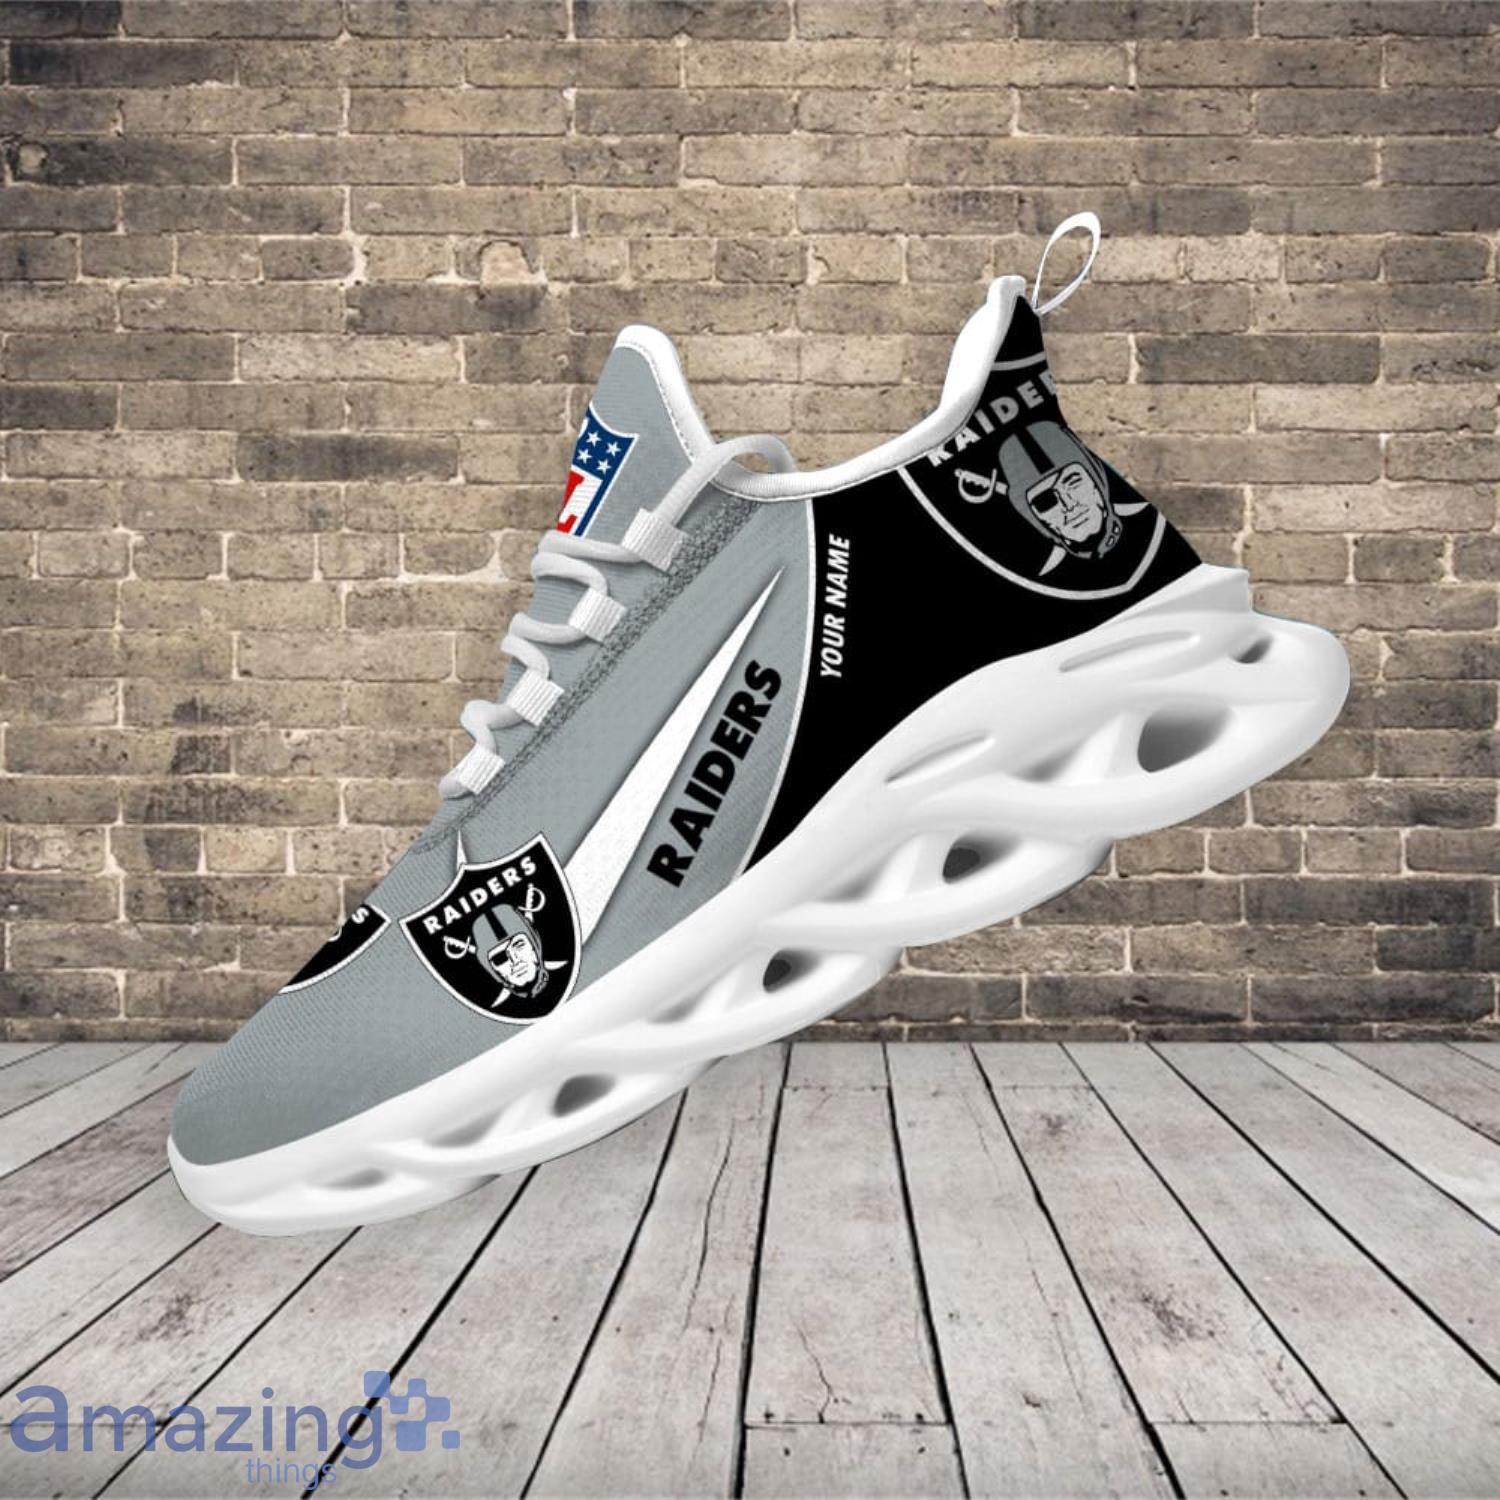 Las Vegas Raiders NFL Clunky Max Soul Shoes Custom Name Best Gift